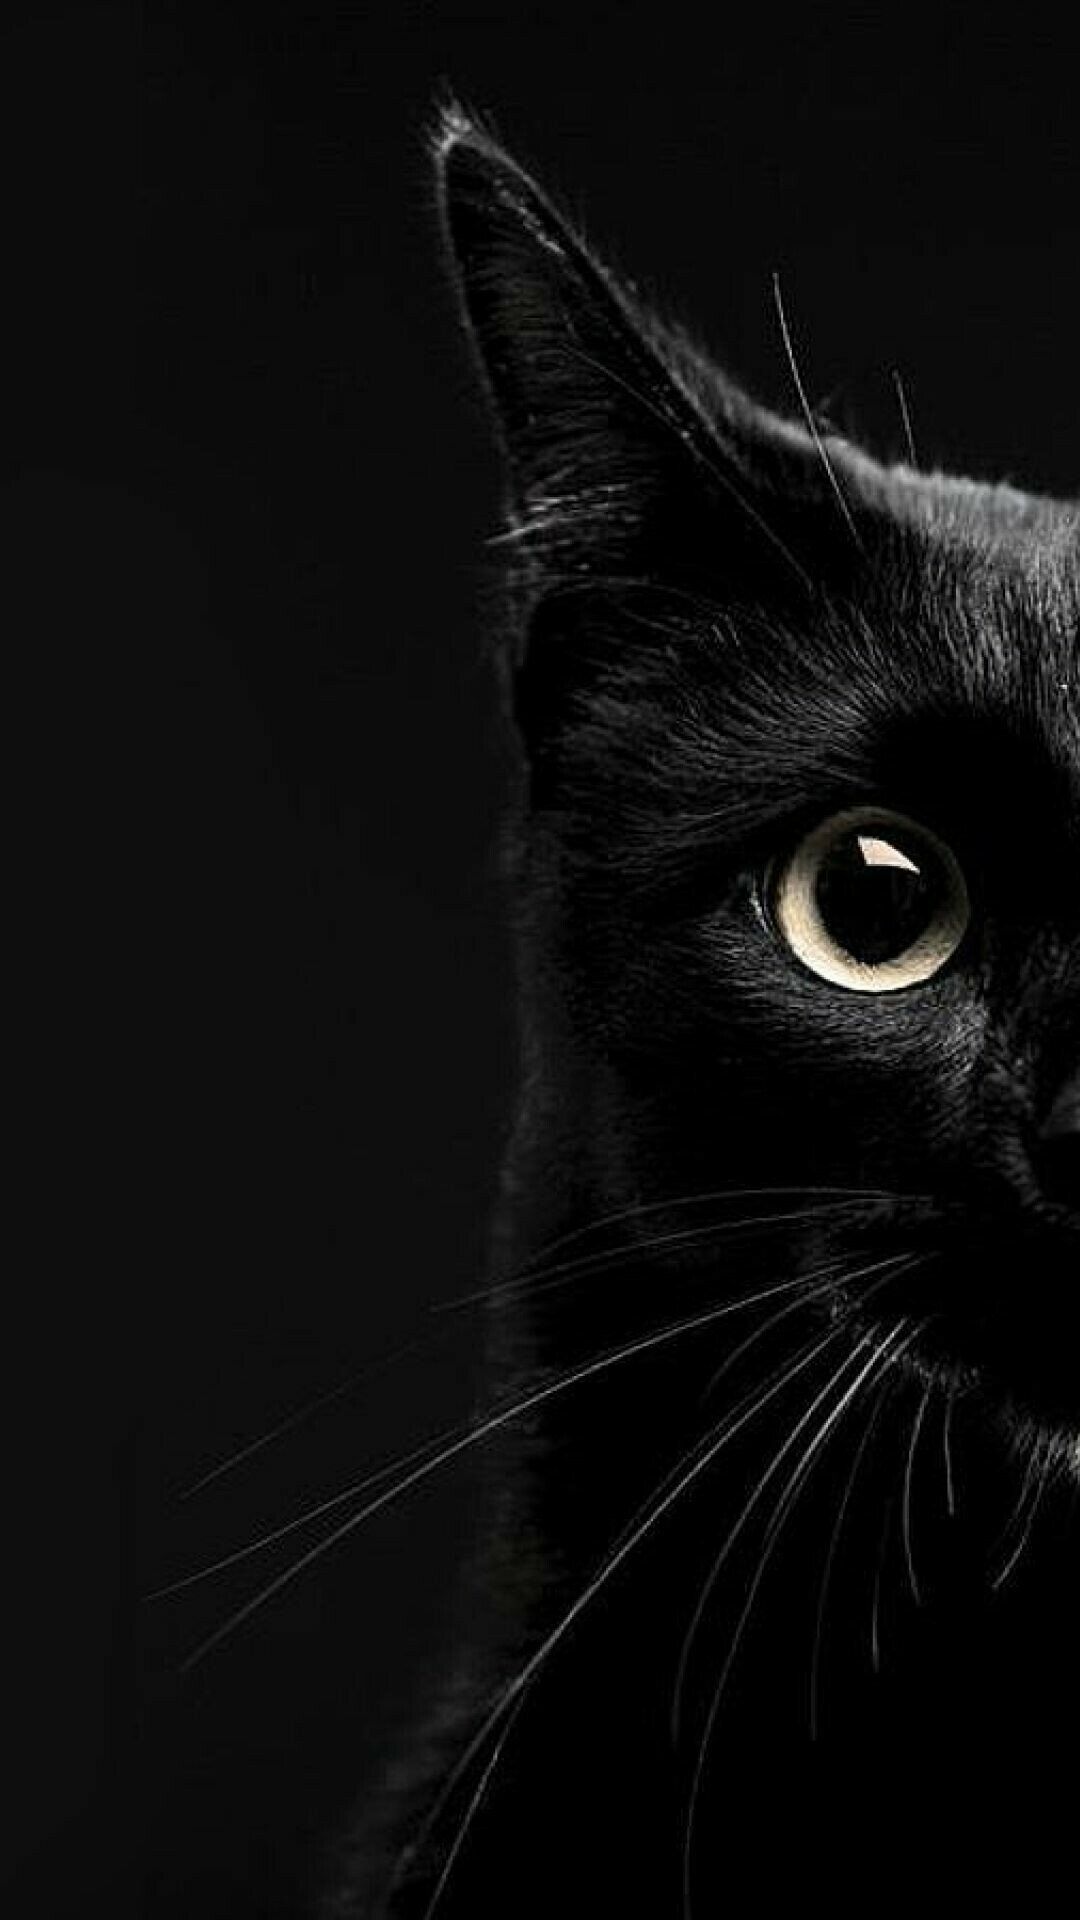 Aesthetic Black Cat Wallpaper Free Aesthetic Black Cat Background